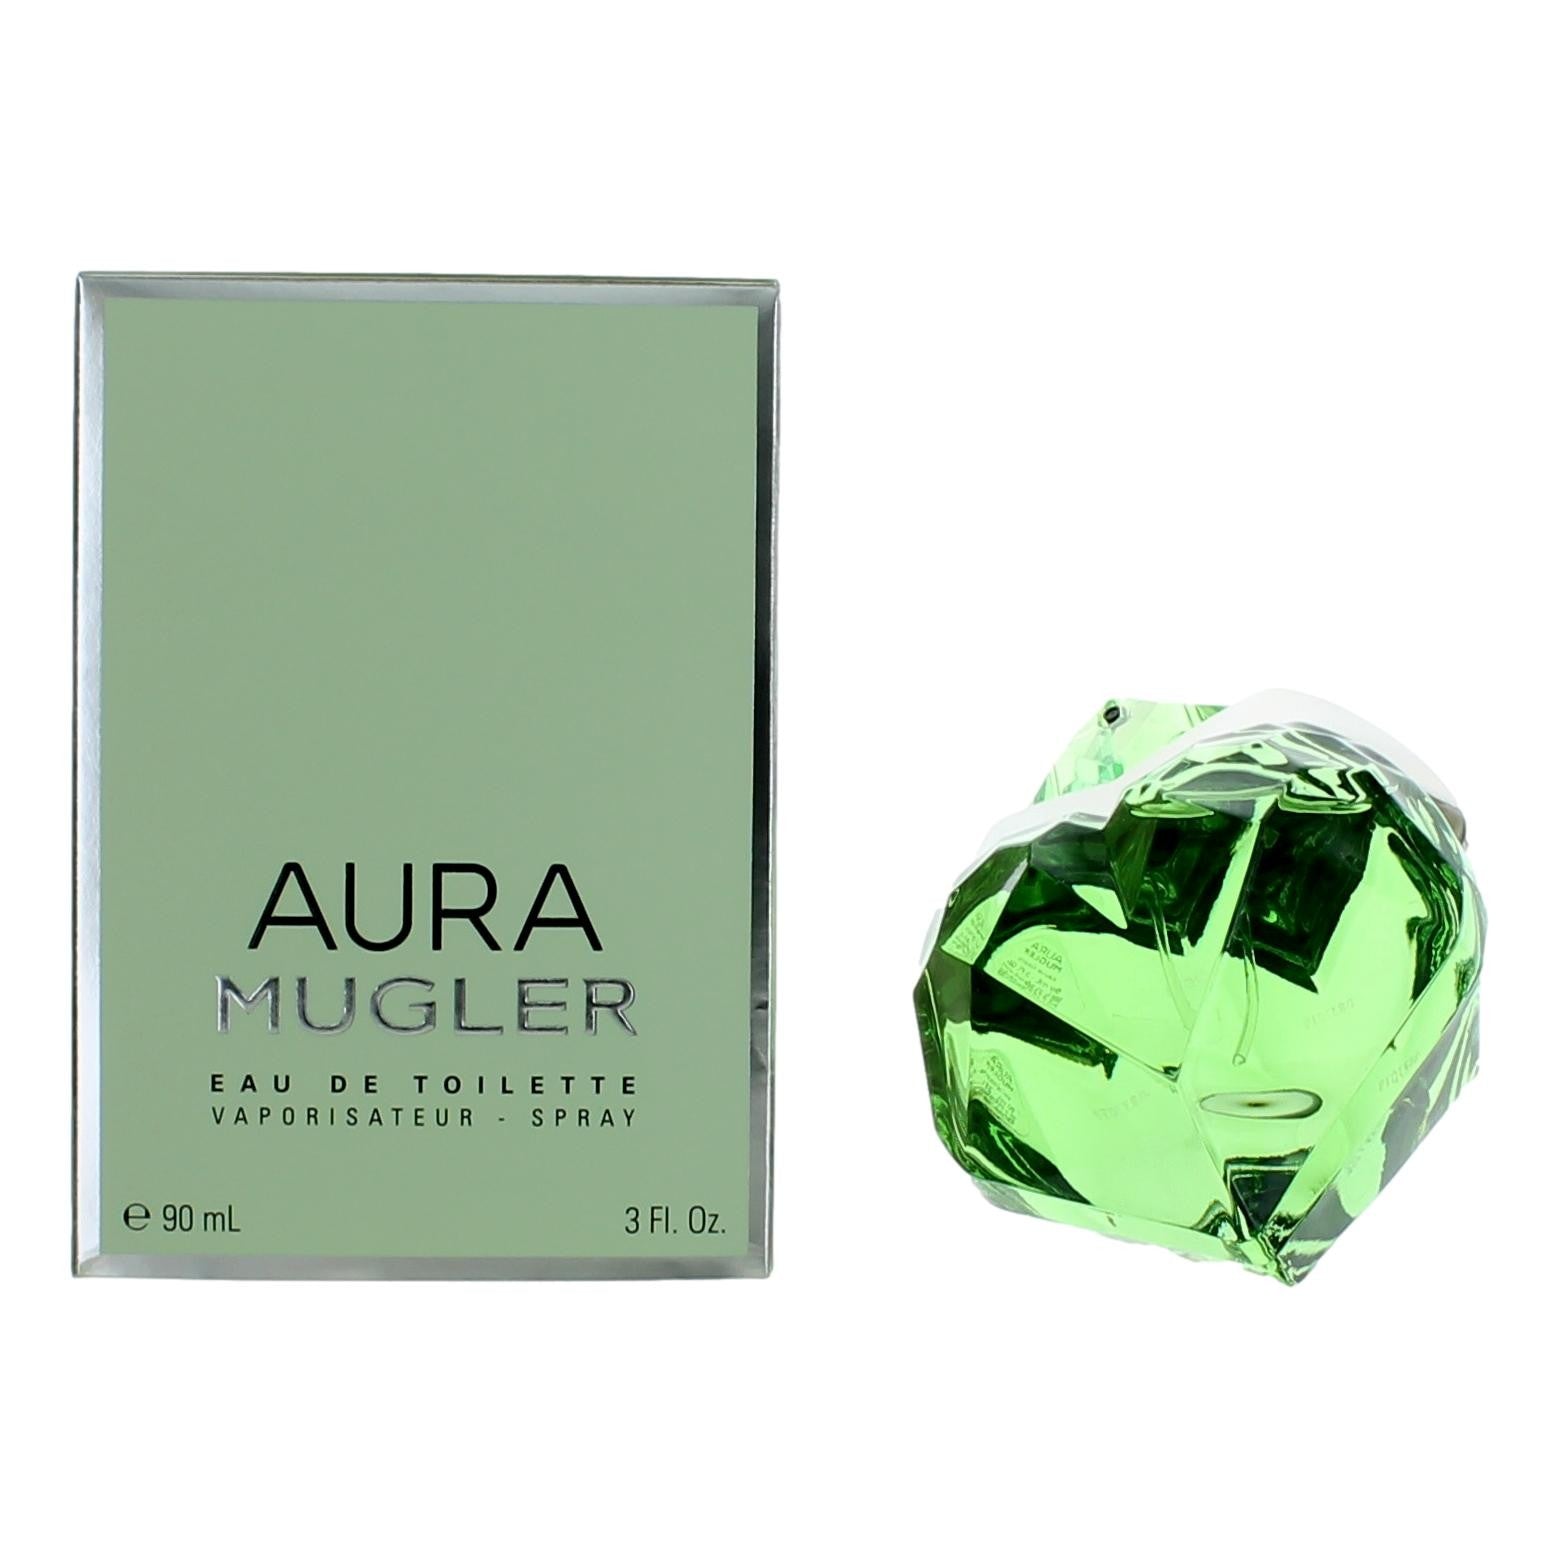 Aura by Thierry Mugler, 3 oz EDT Spray for Women.